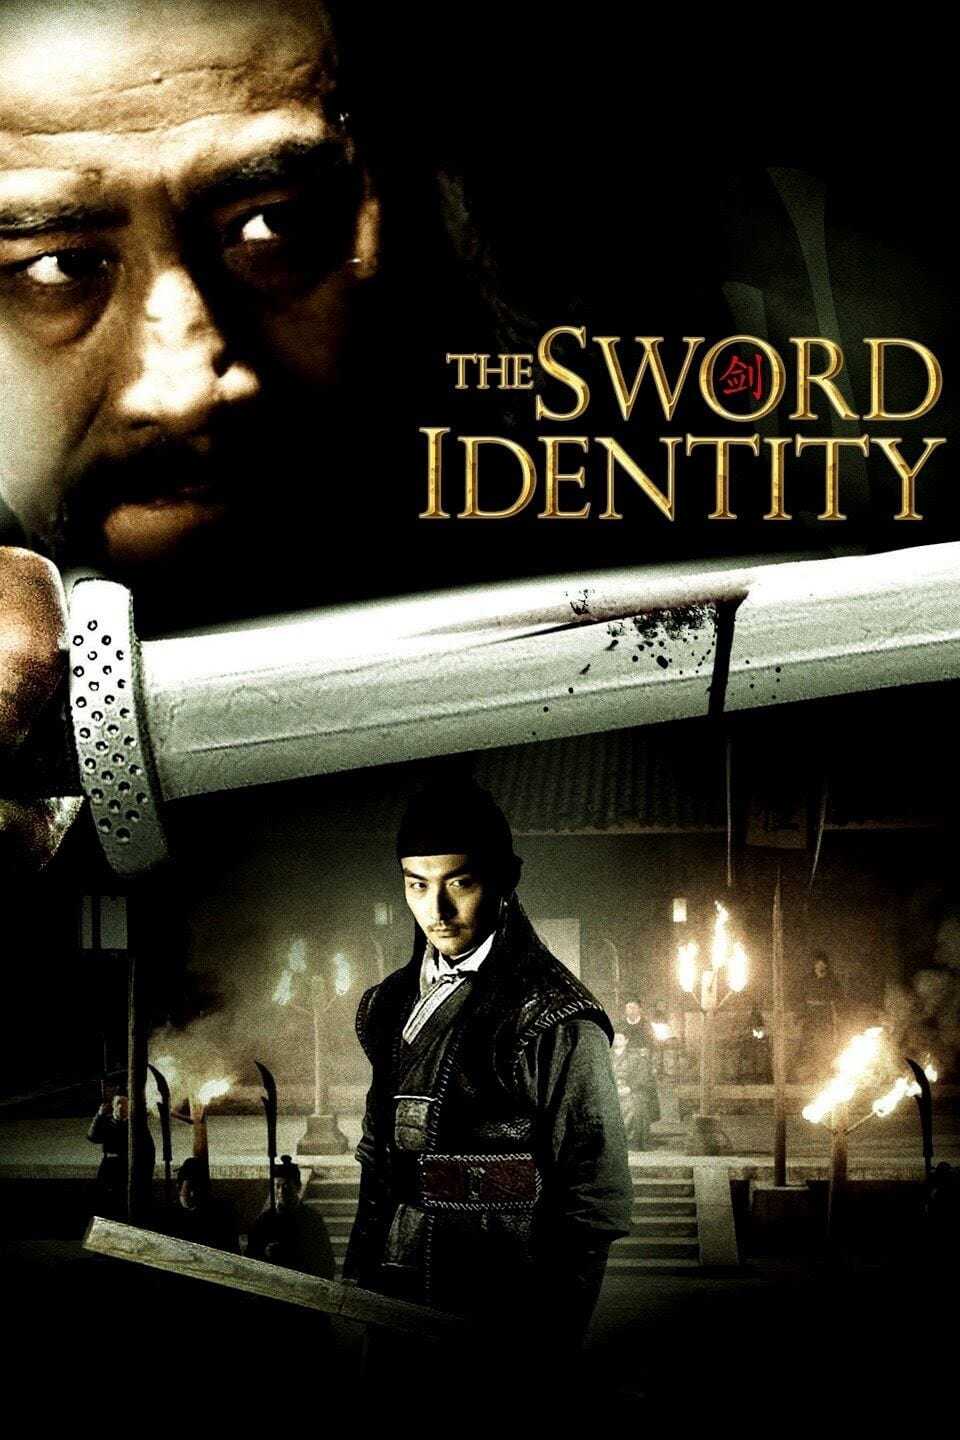 Thích khách bí ẩn - The sword identity